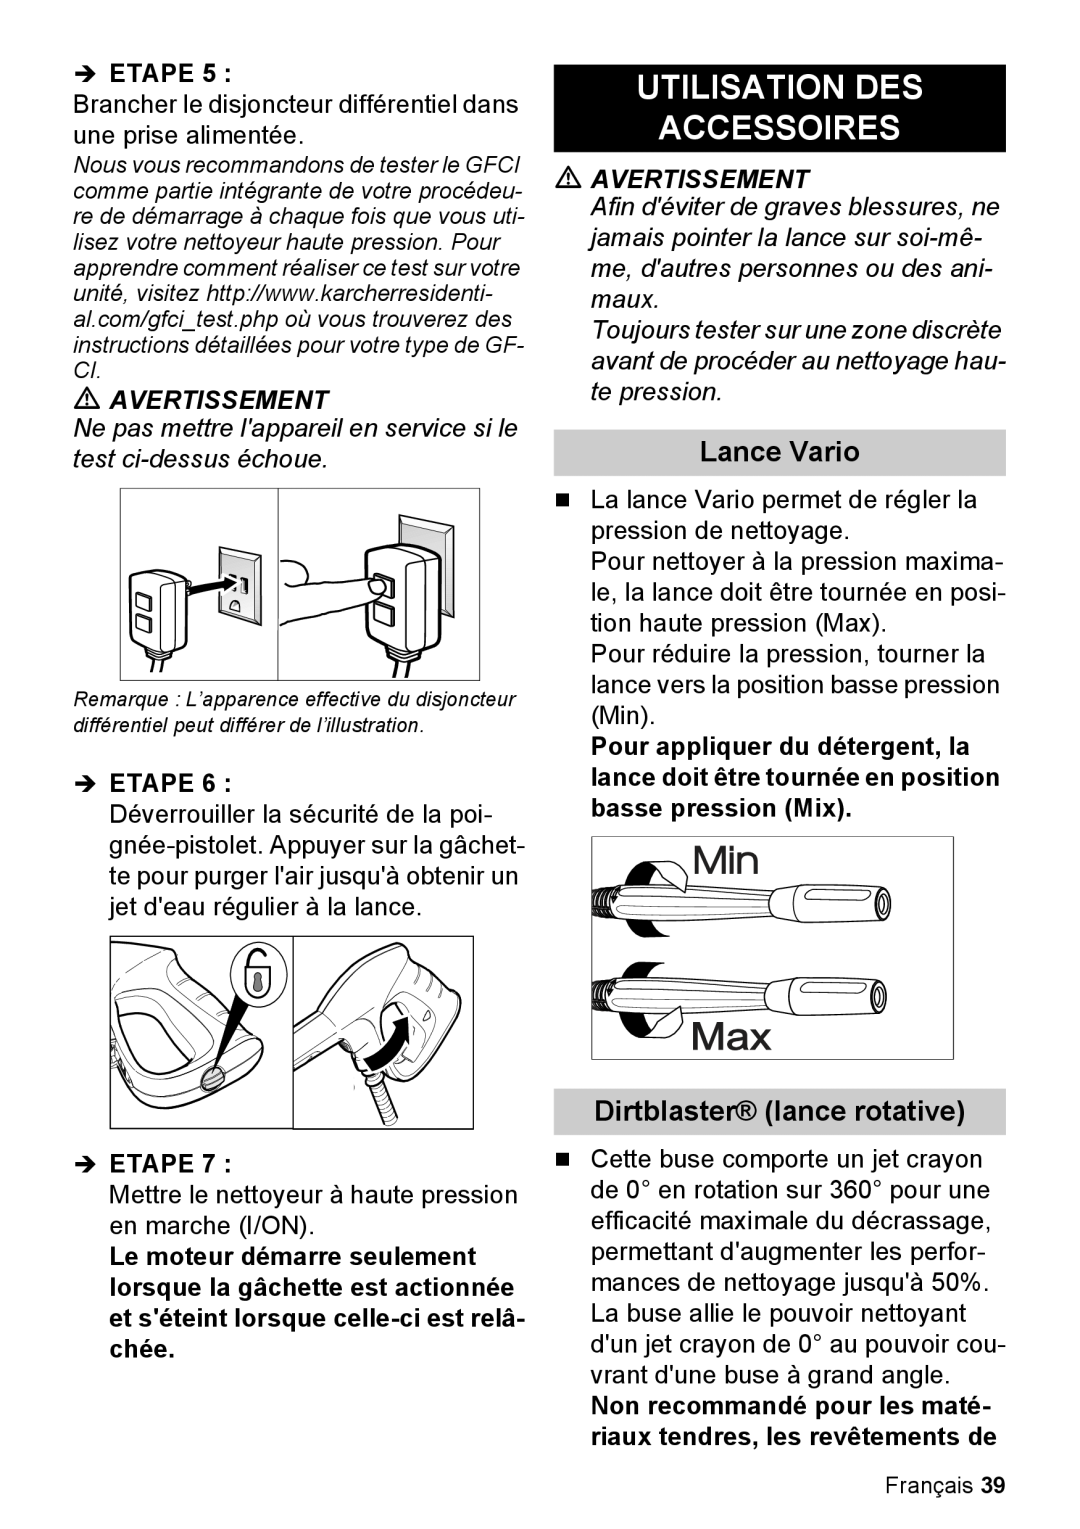 Karcher K 5.85 M manual Utilisation Des Accessoires, Lance Vario, Dirtblaster lance rotative, Avertissement 